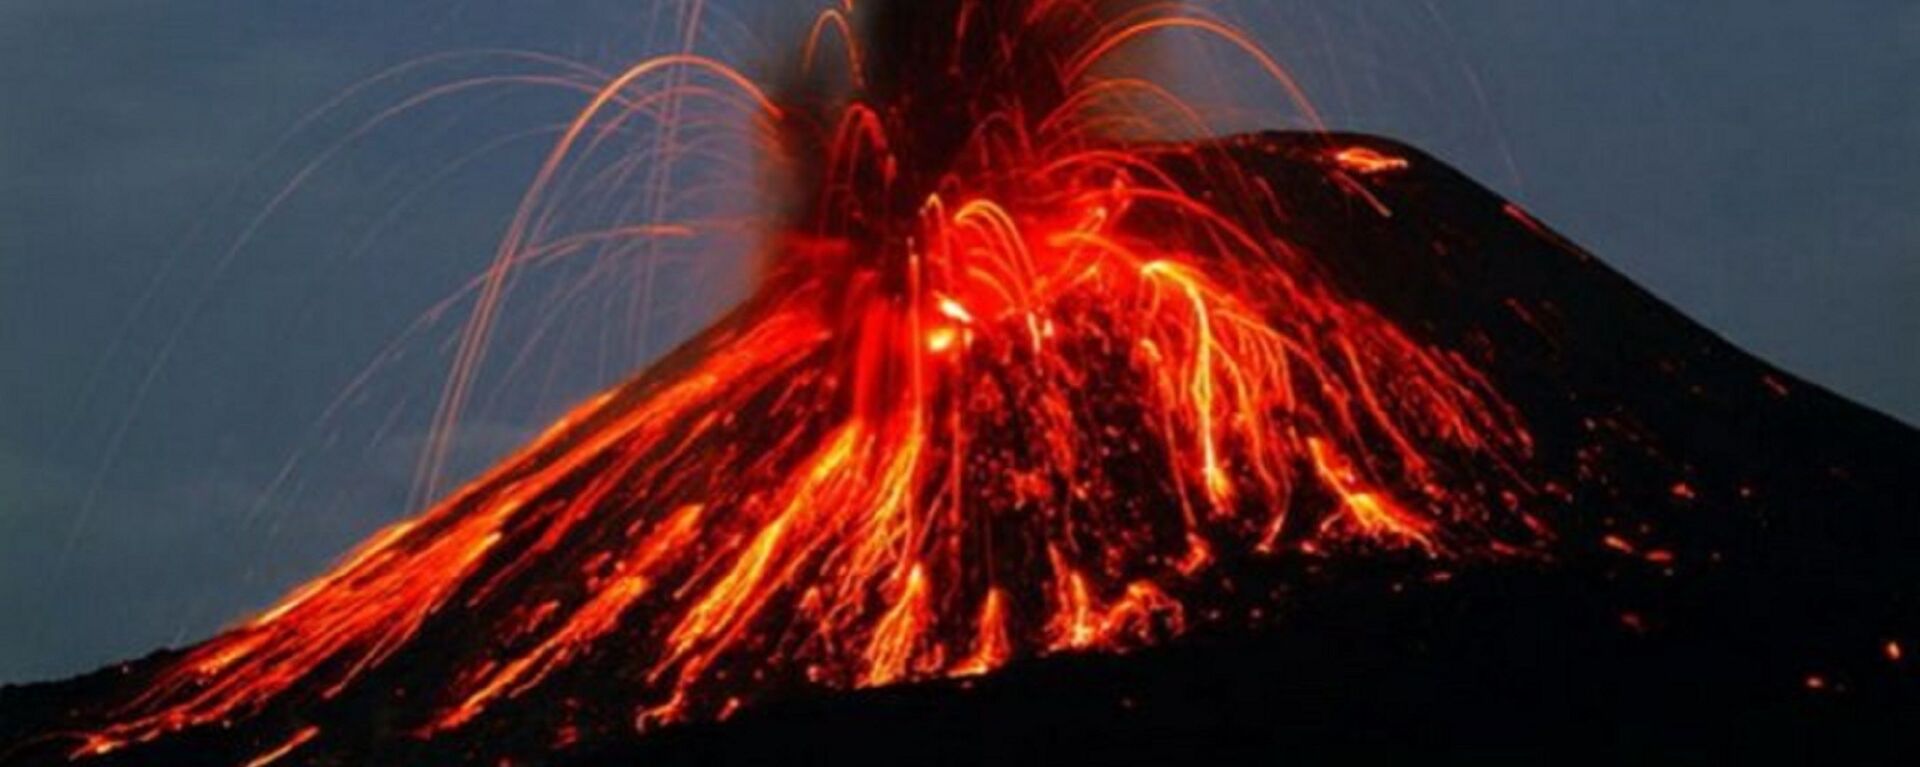 Eruption of a volcano - Sputnik International, 1920, 11.04.2020